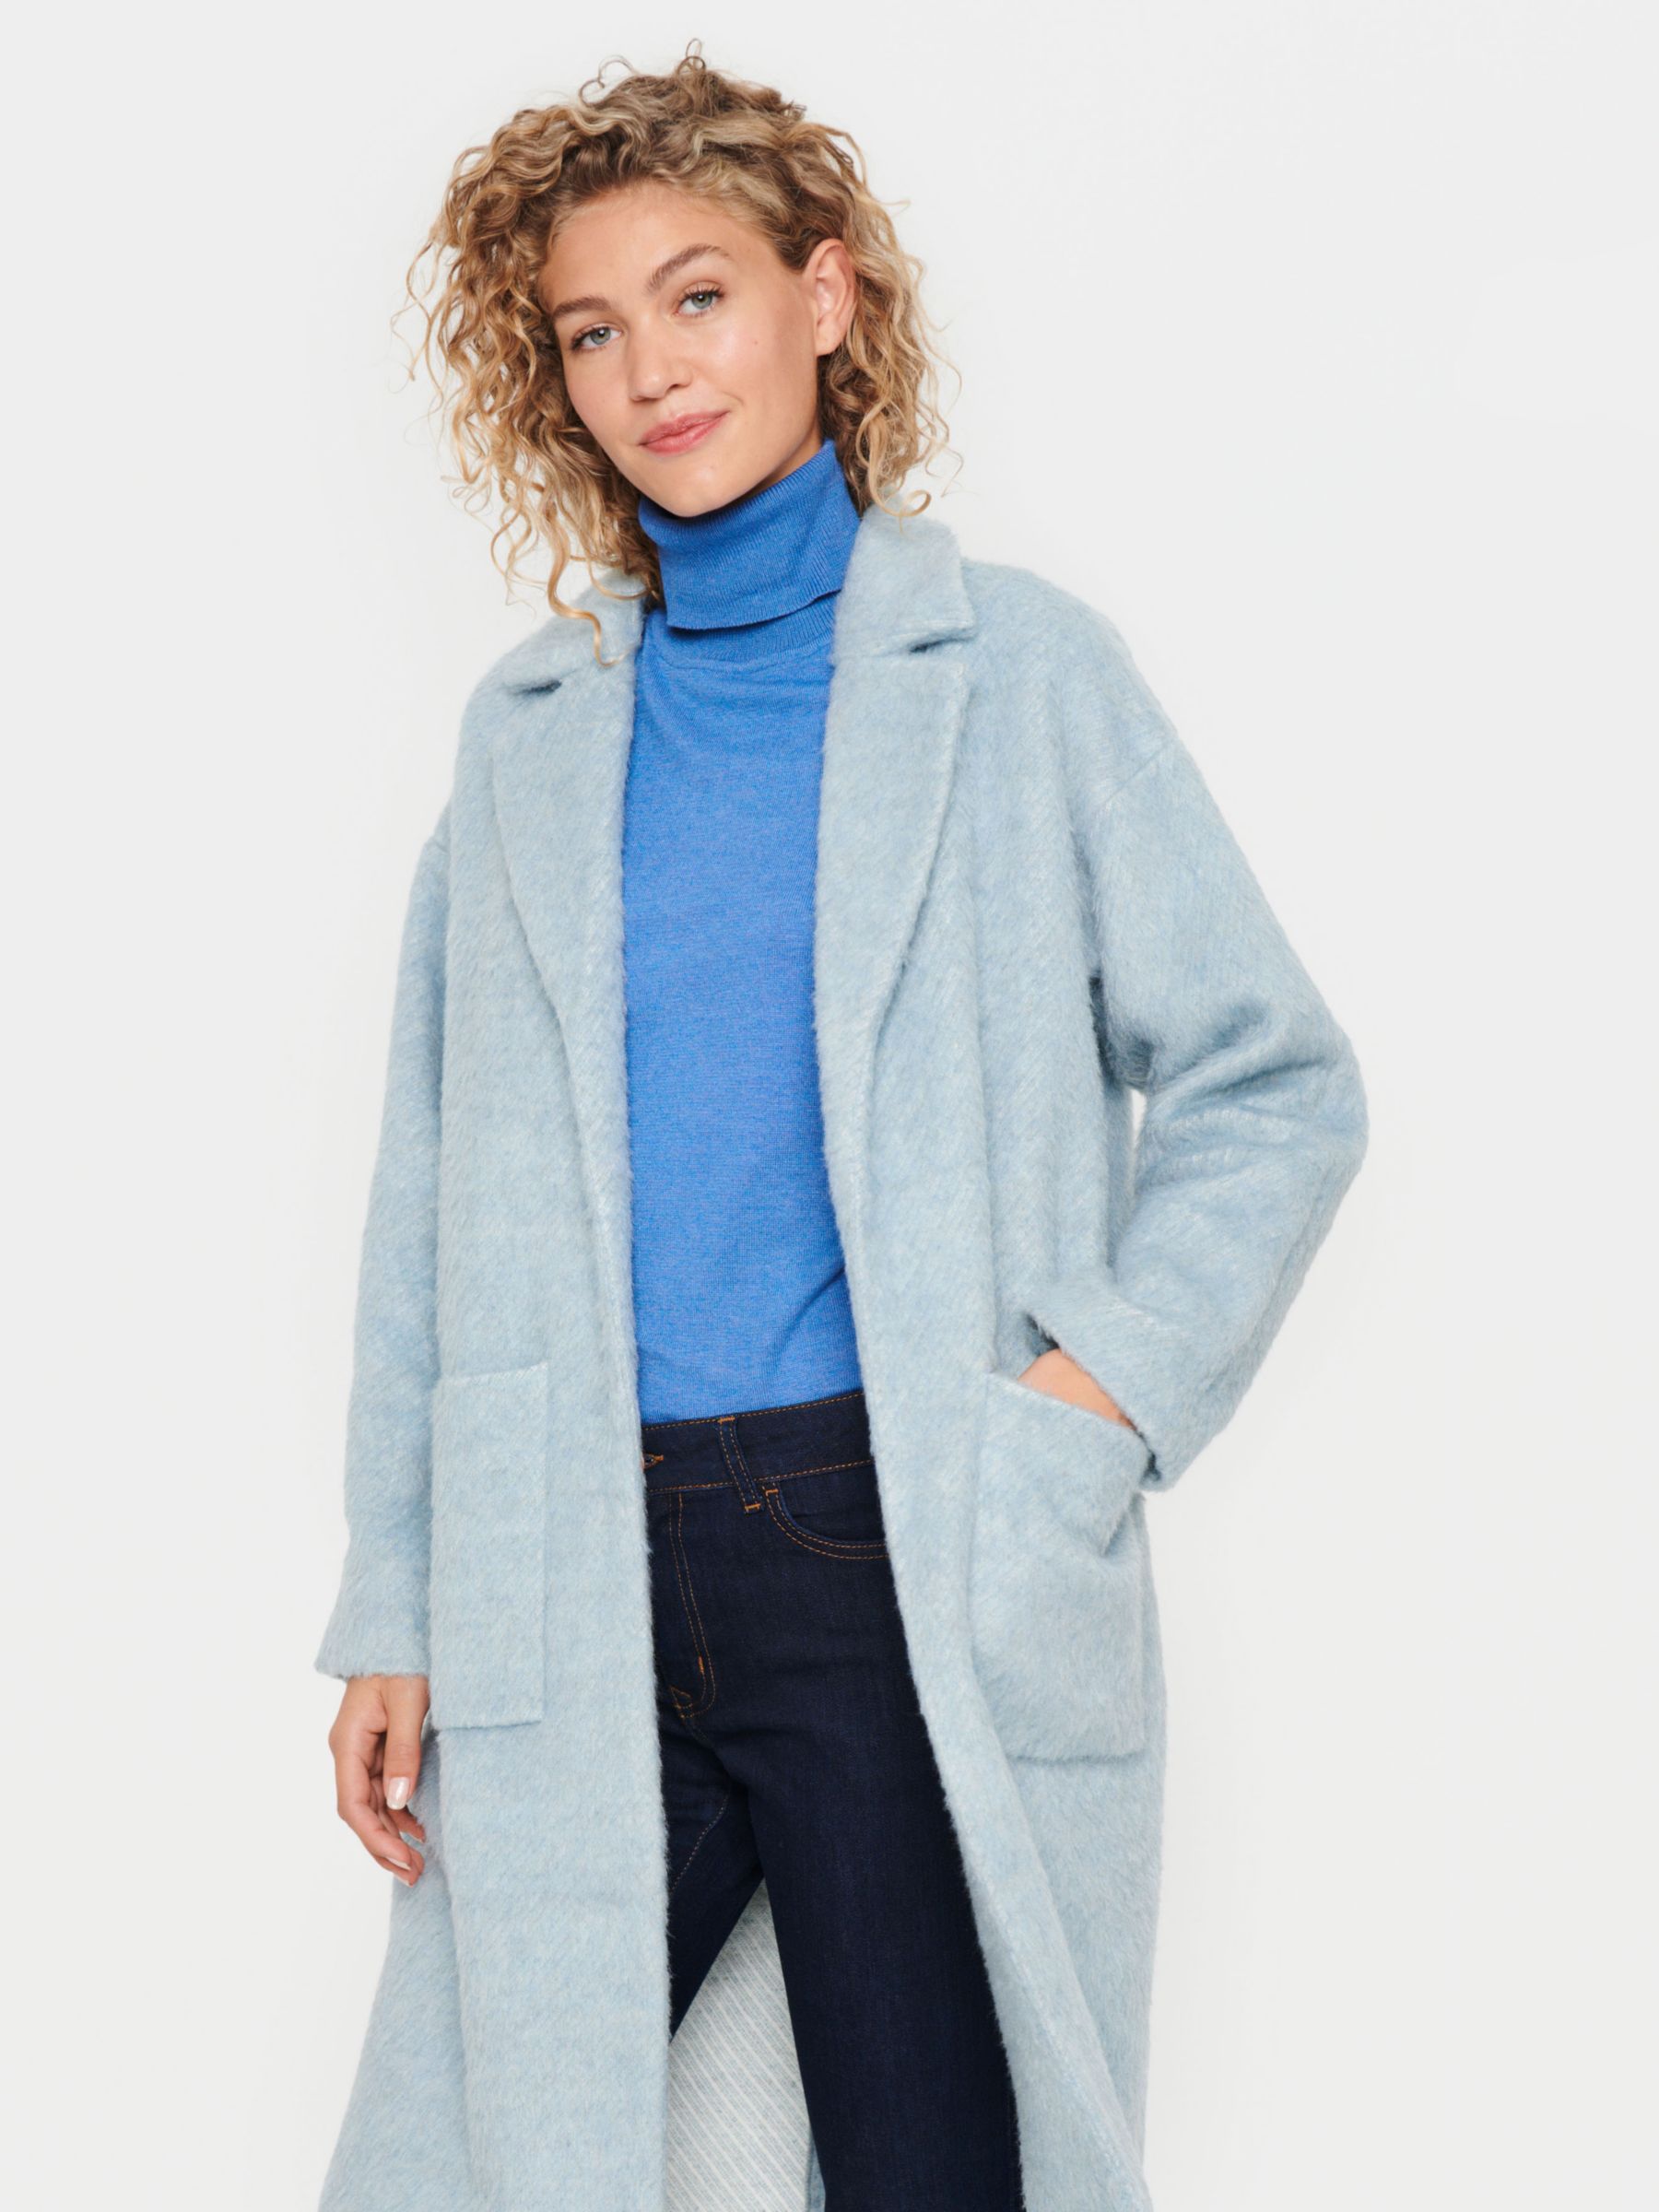 Buy Saint Tropez Cora Wool Blend Coat Online at johnlewis.com